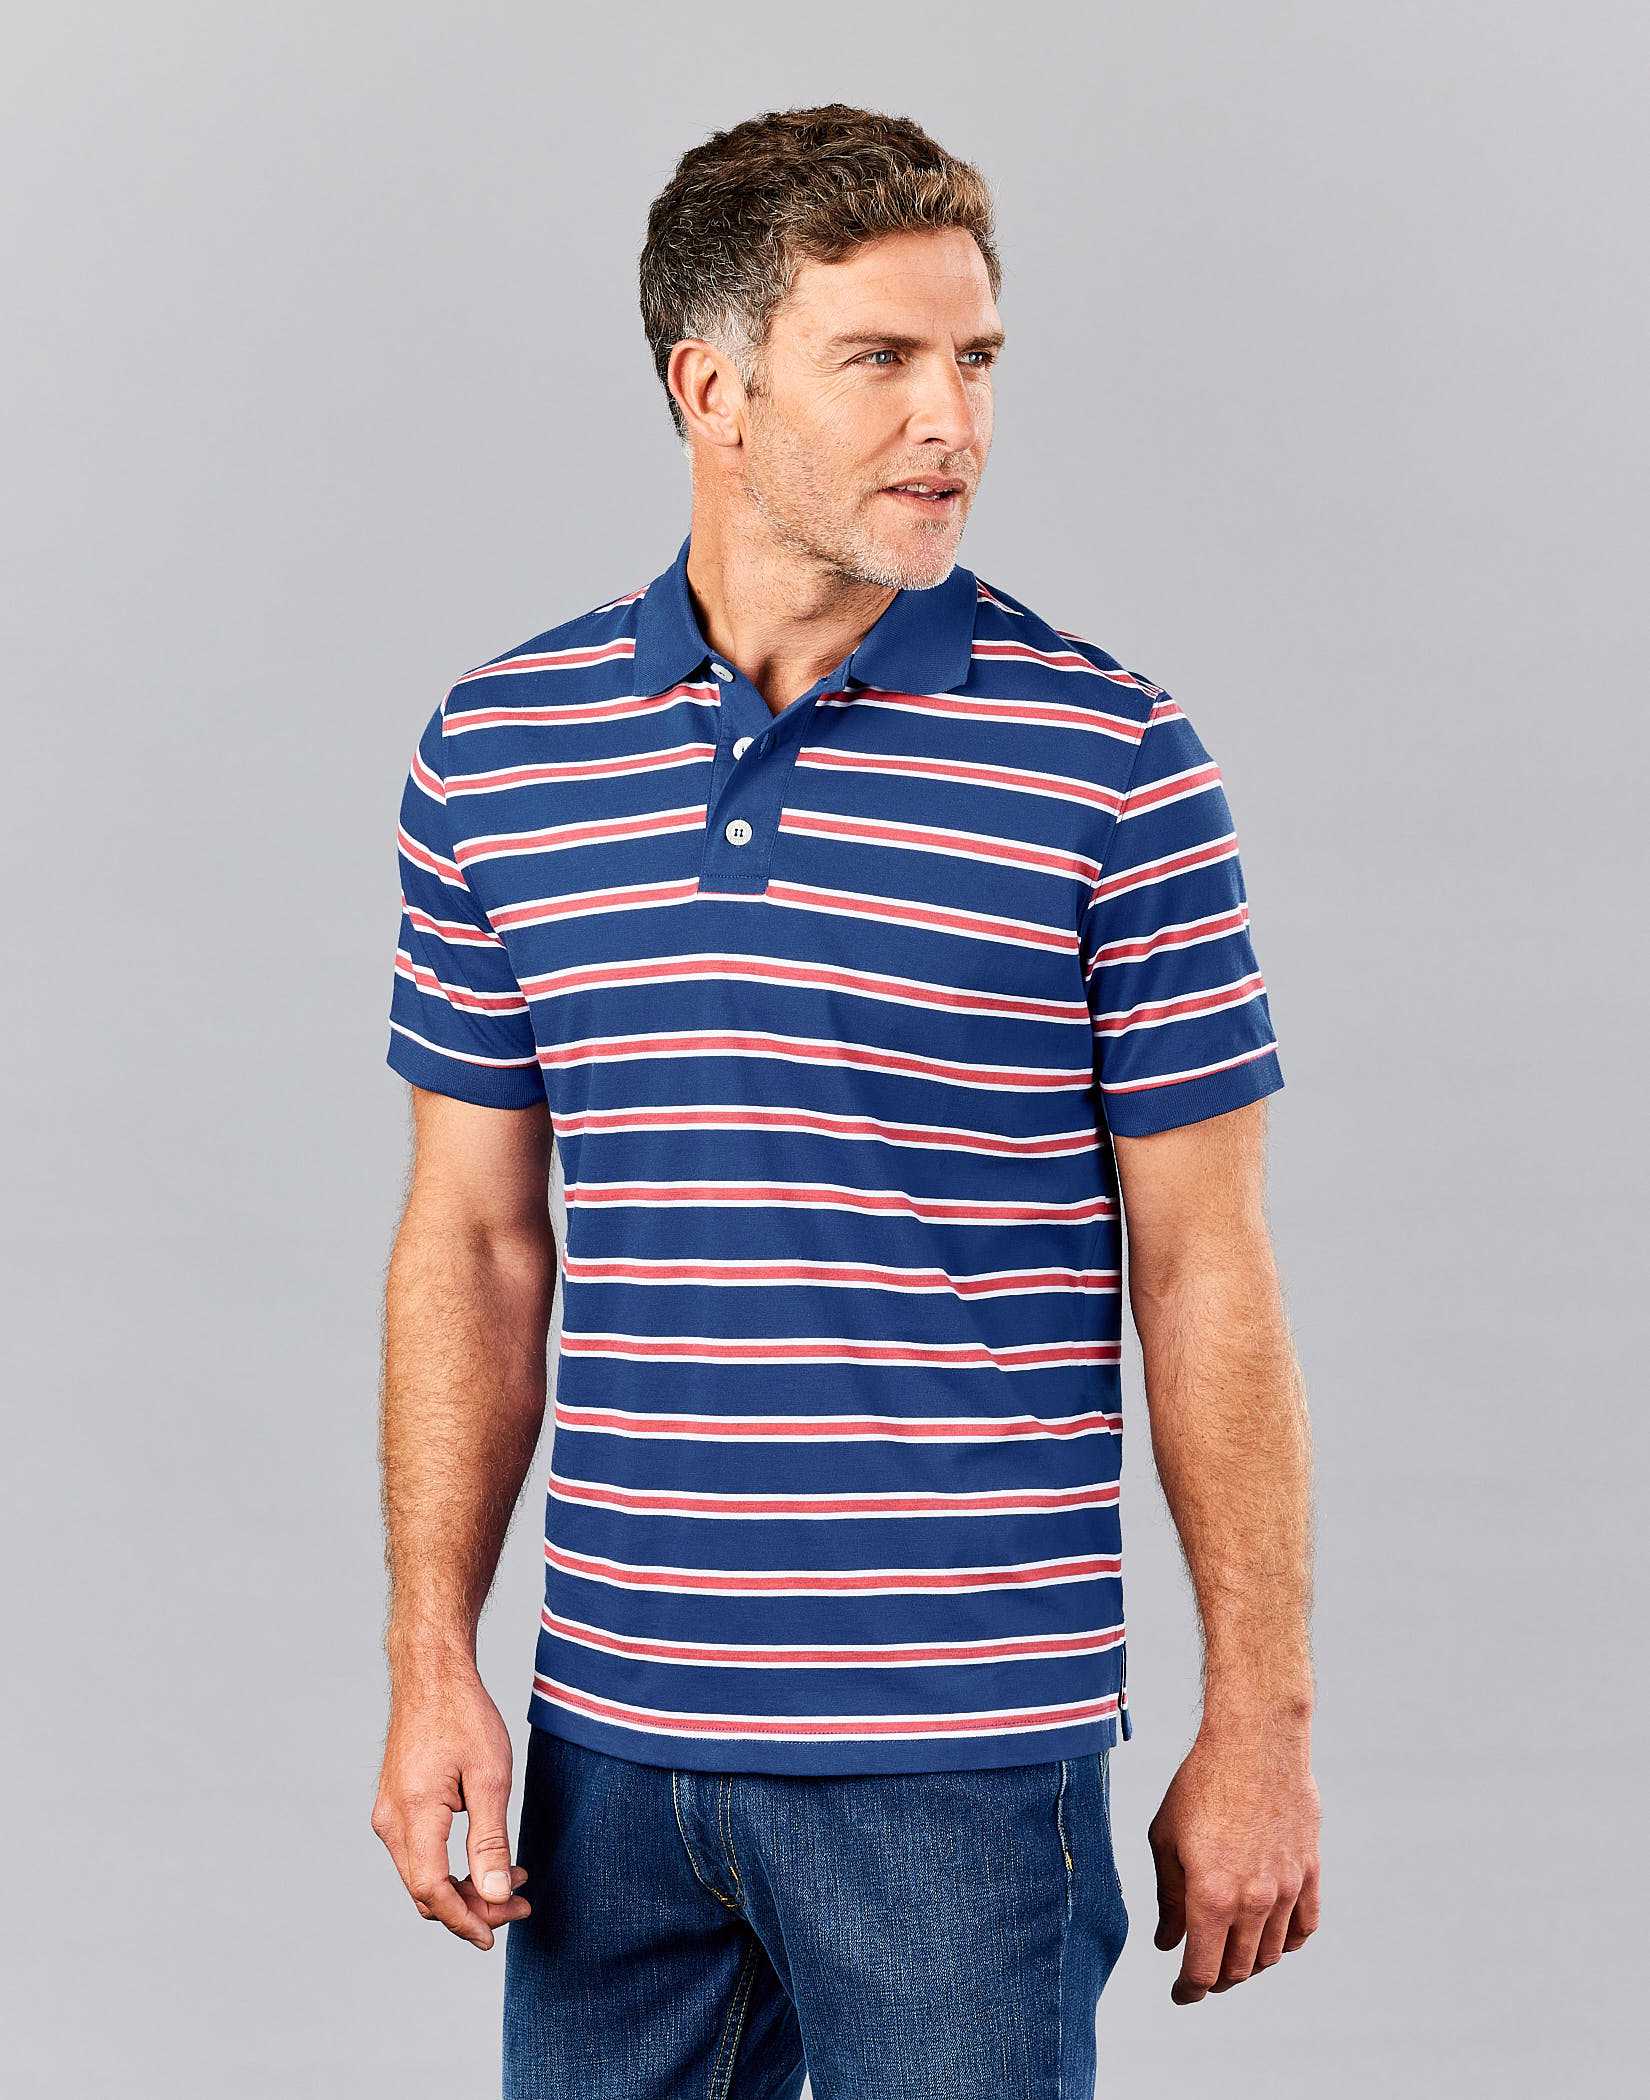 Joseph Turner Men's Striped Polo Shirt - Blue/Red S